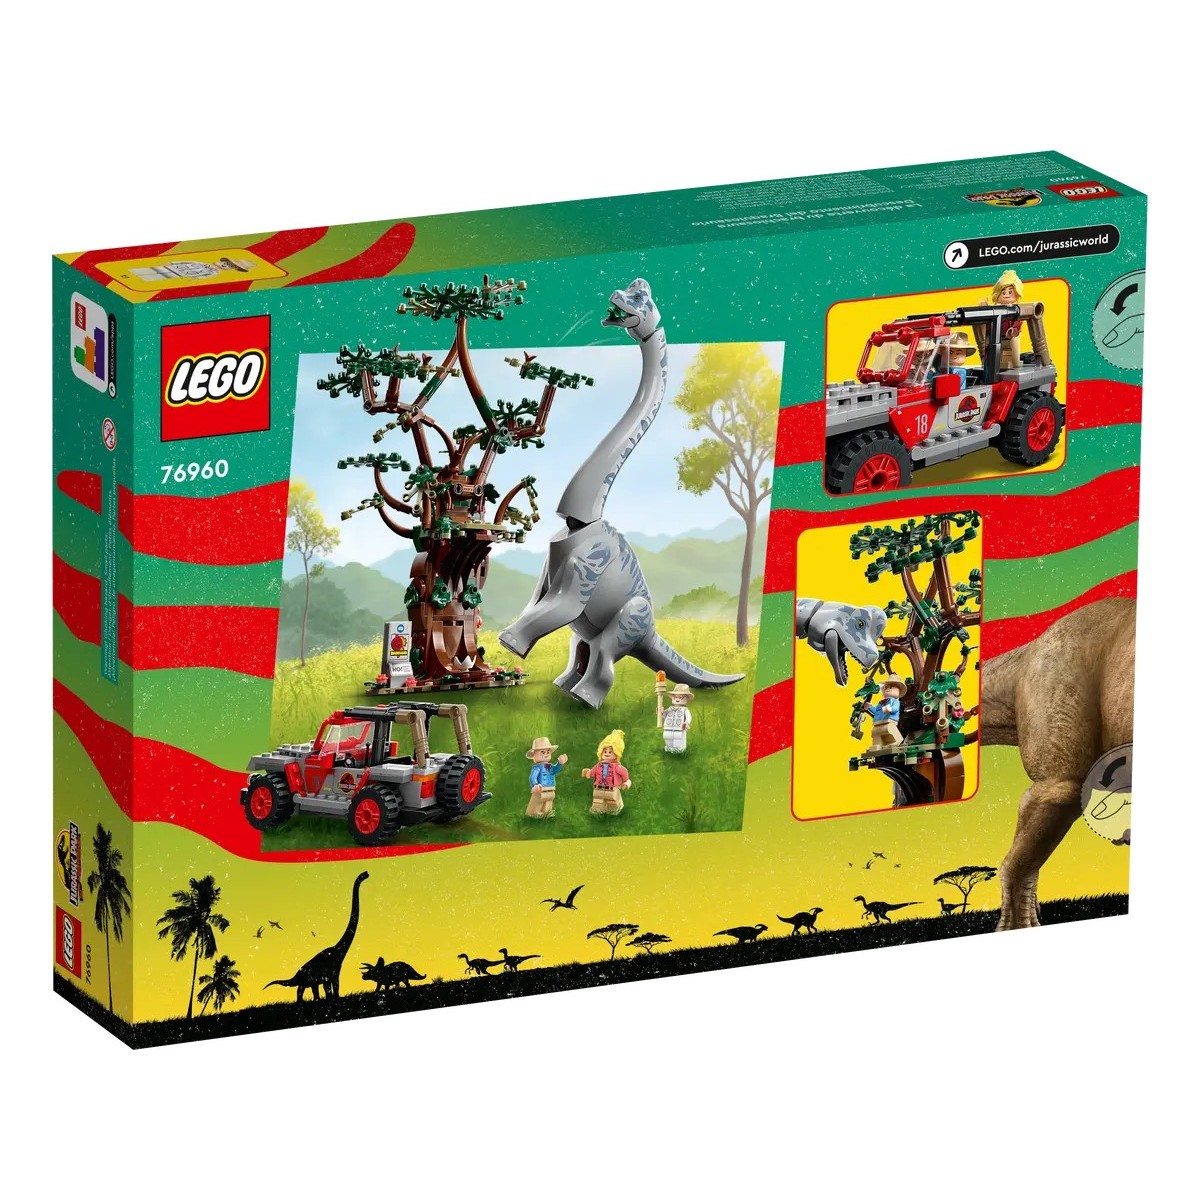 LEGO JURASSIC WORLD OBJAVENIE BRACHIOSAURA /76960/ posledný kus